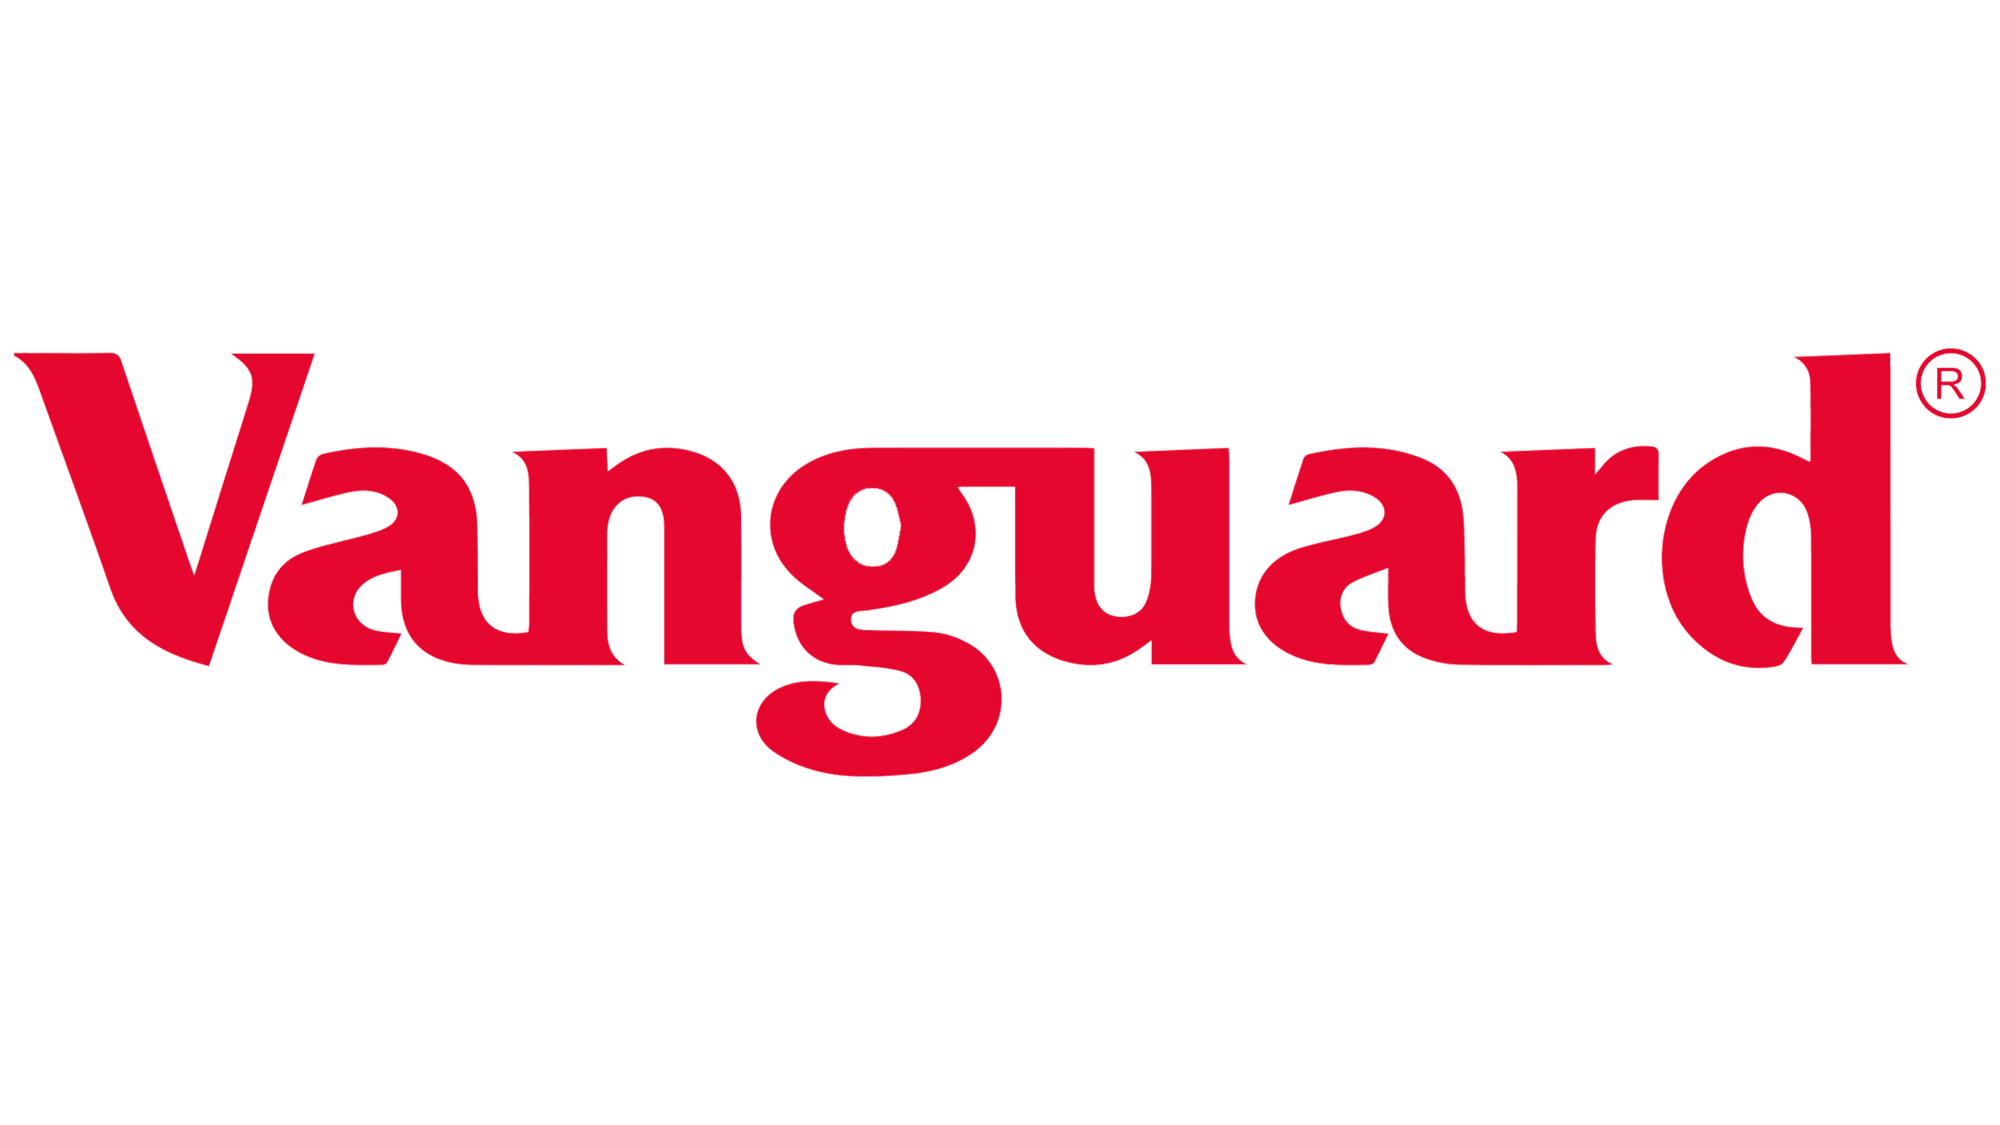 Vanguard-logo